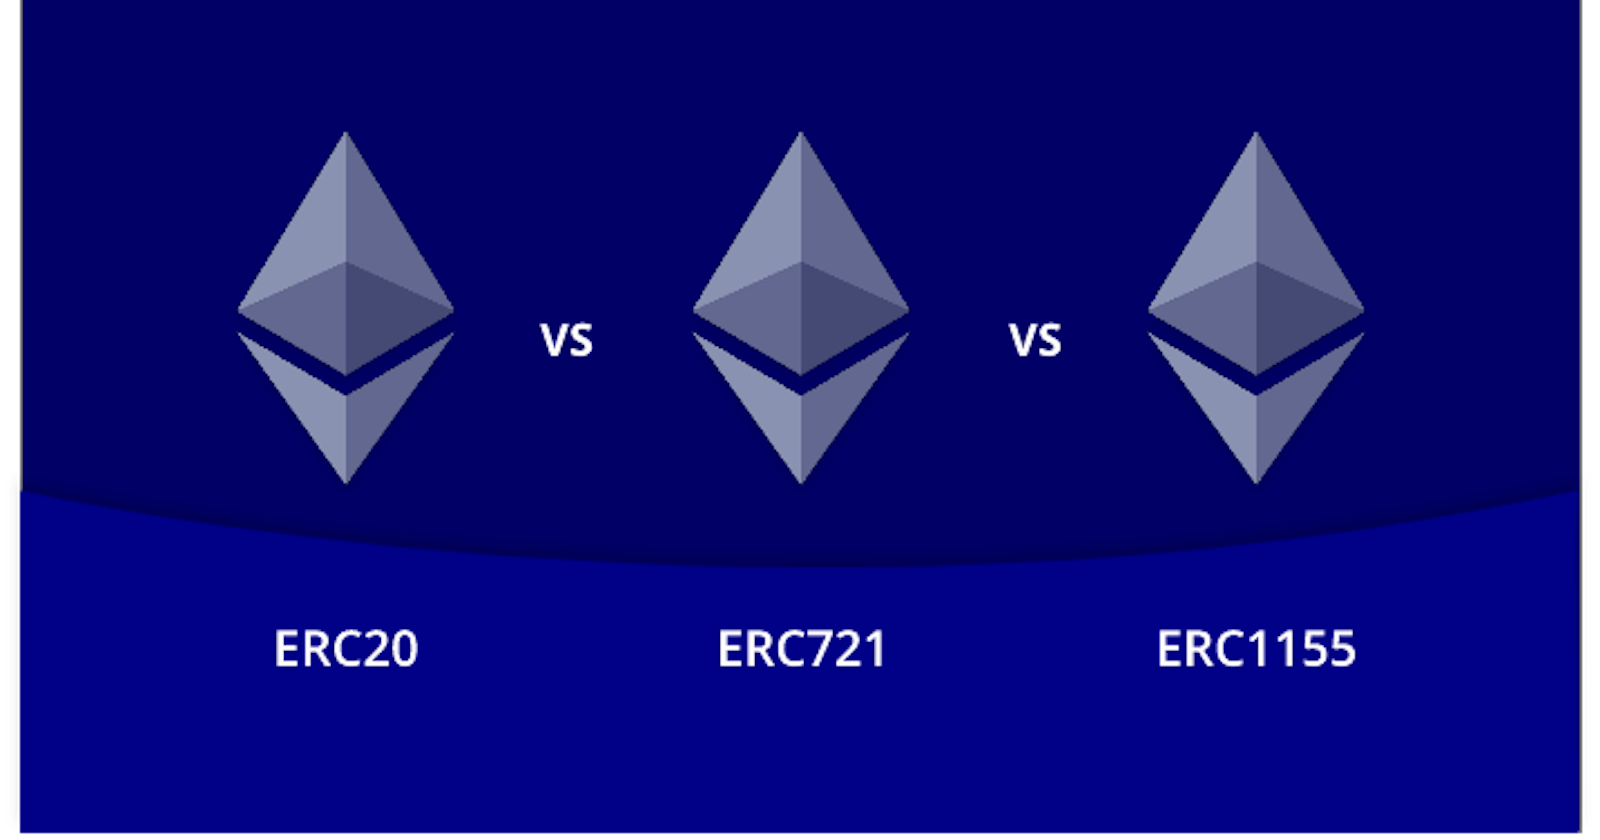 ERC20 vs ERC721 vs ERC1155